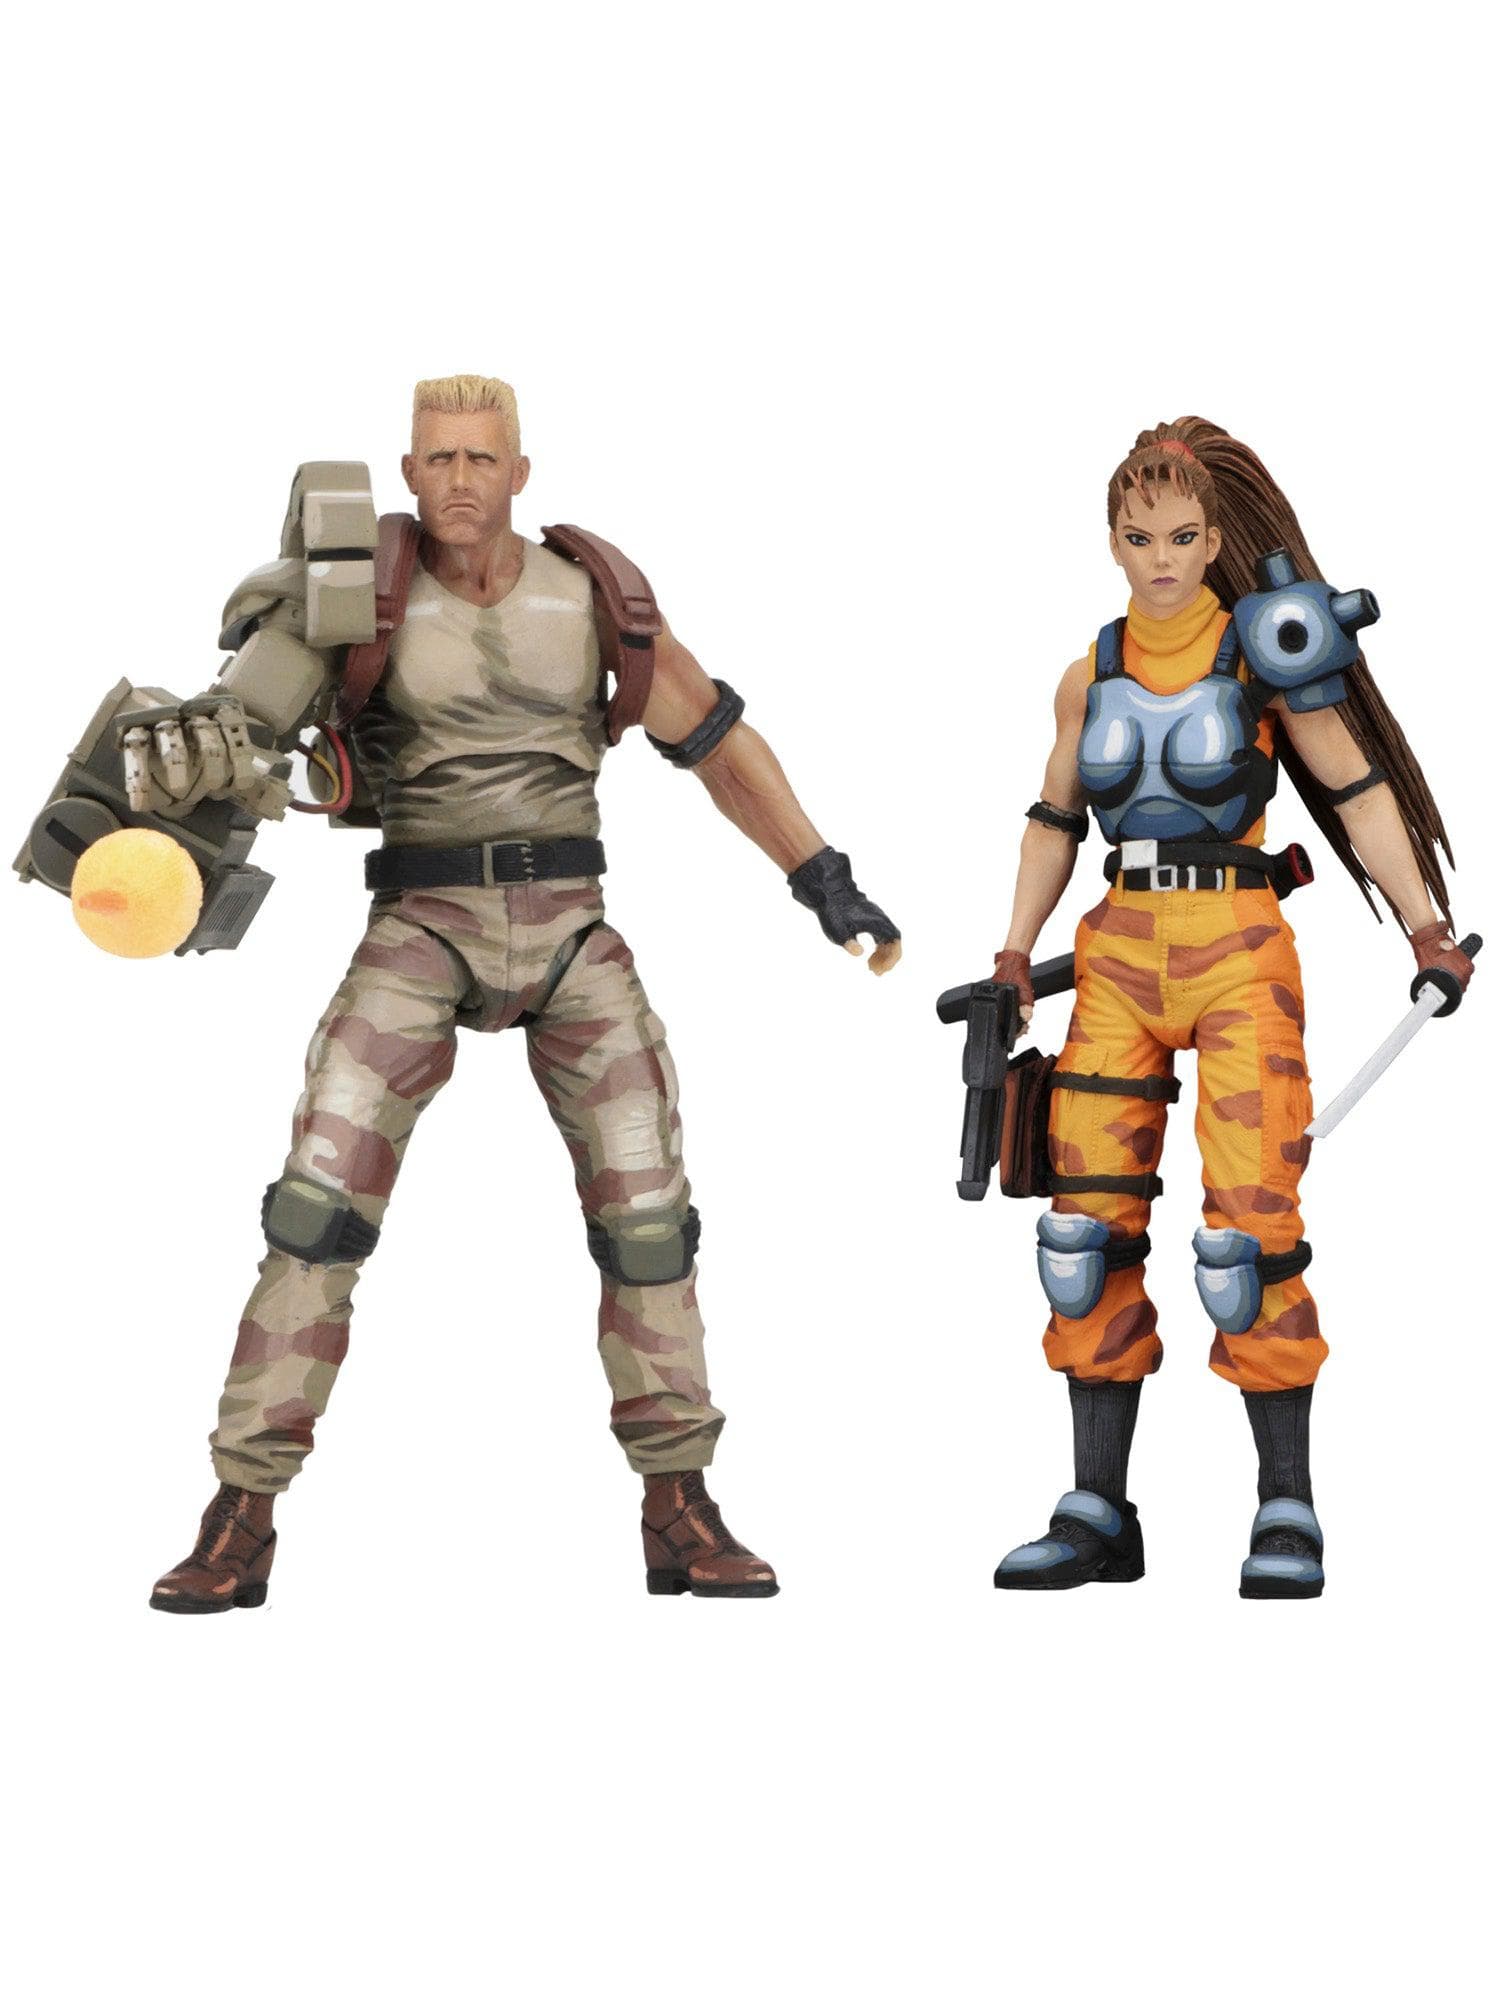 NECA - Alien vs Predator - 7" Scale Figure - Dutch & Lin Arcade - 2 Pack - costumes.com